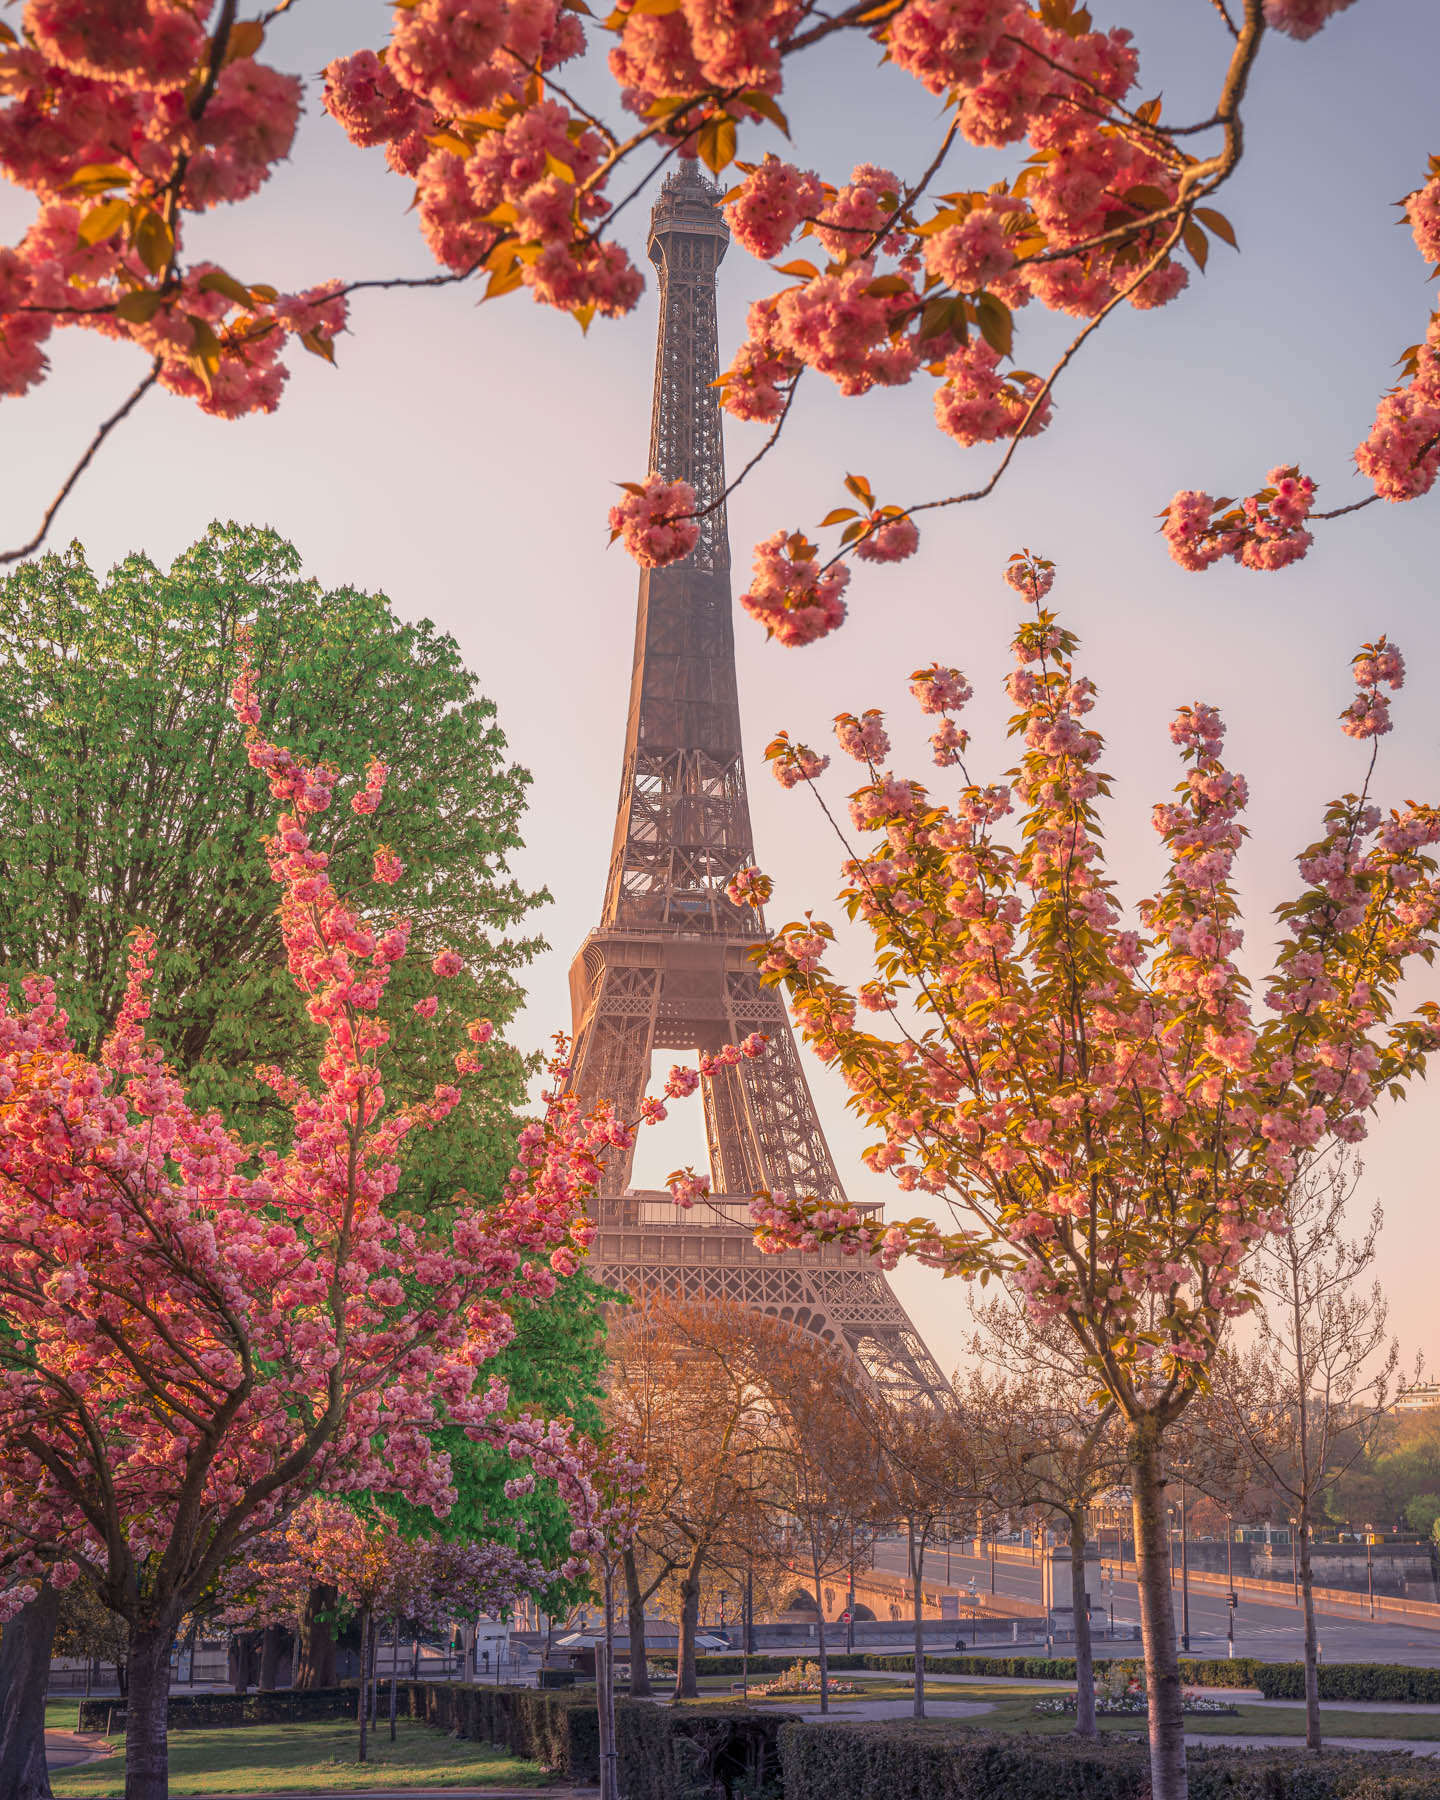 Eiffel Tower in Spring - Spring in Paris